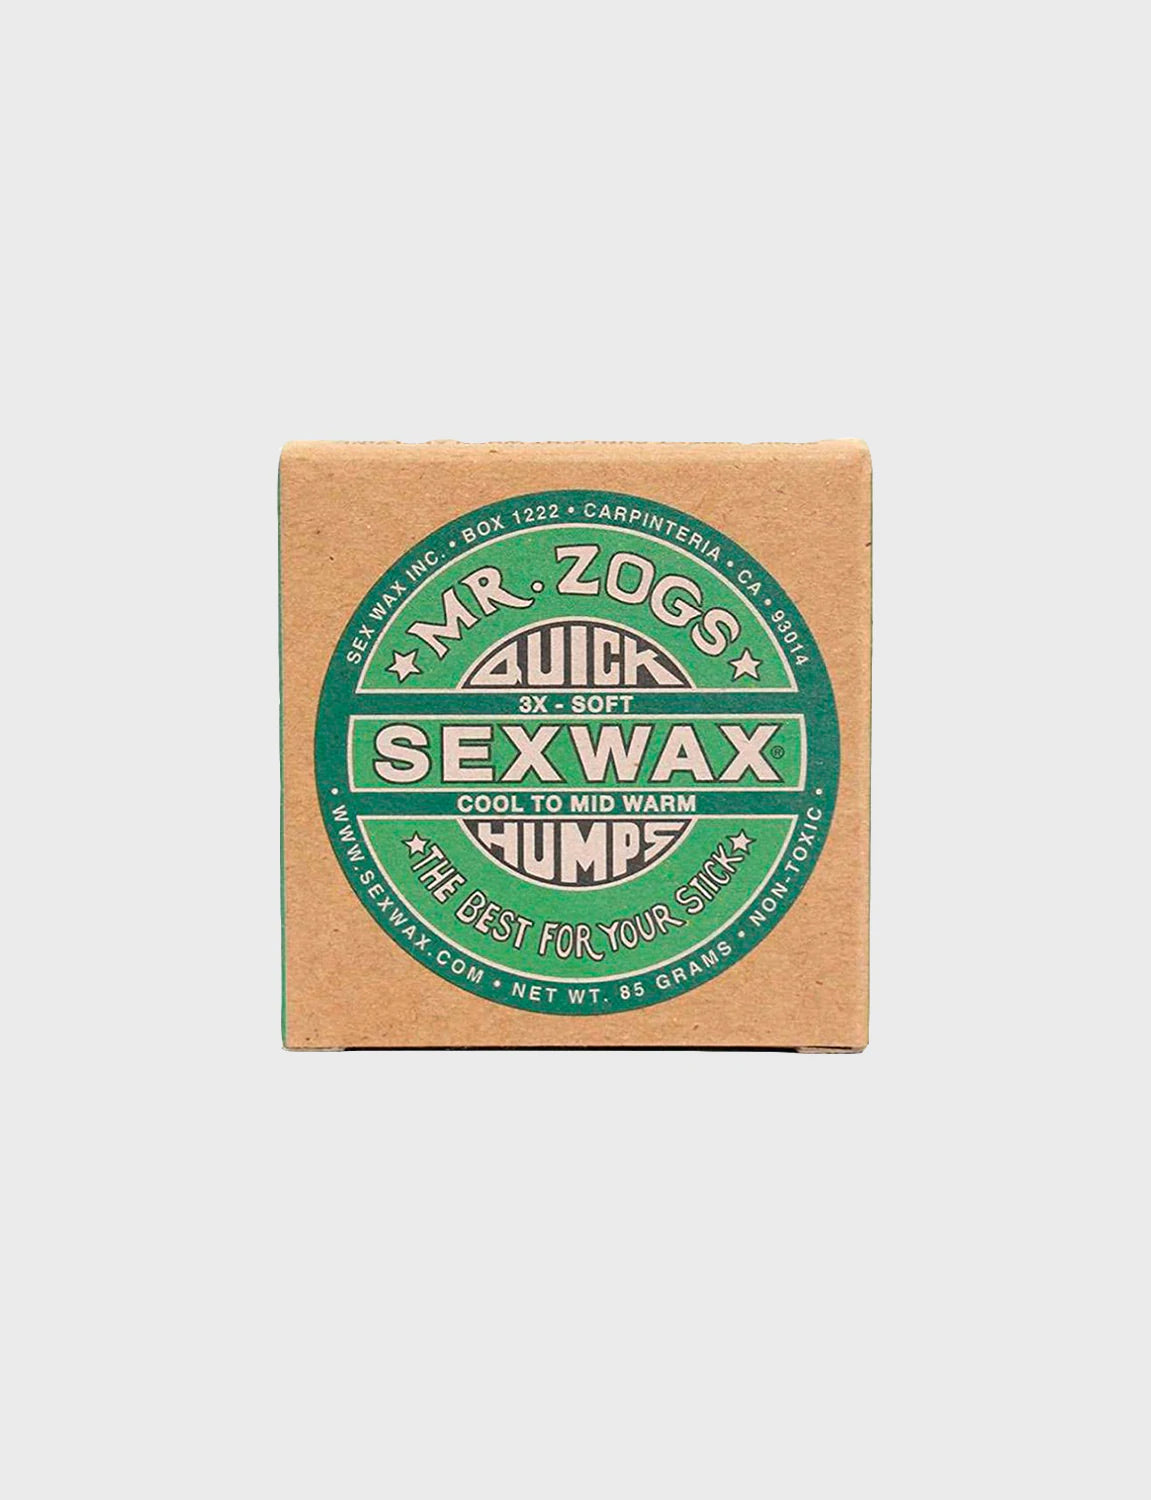 Sex Wax Quick Humps 3X Cold: Green Surf Wax